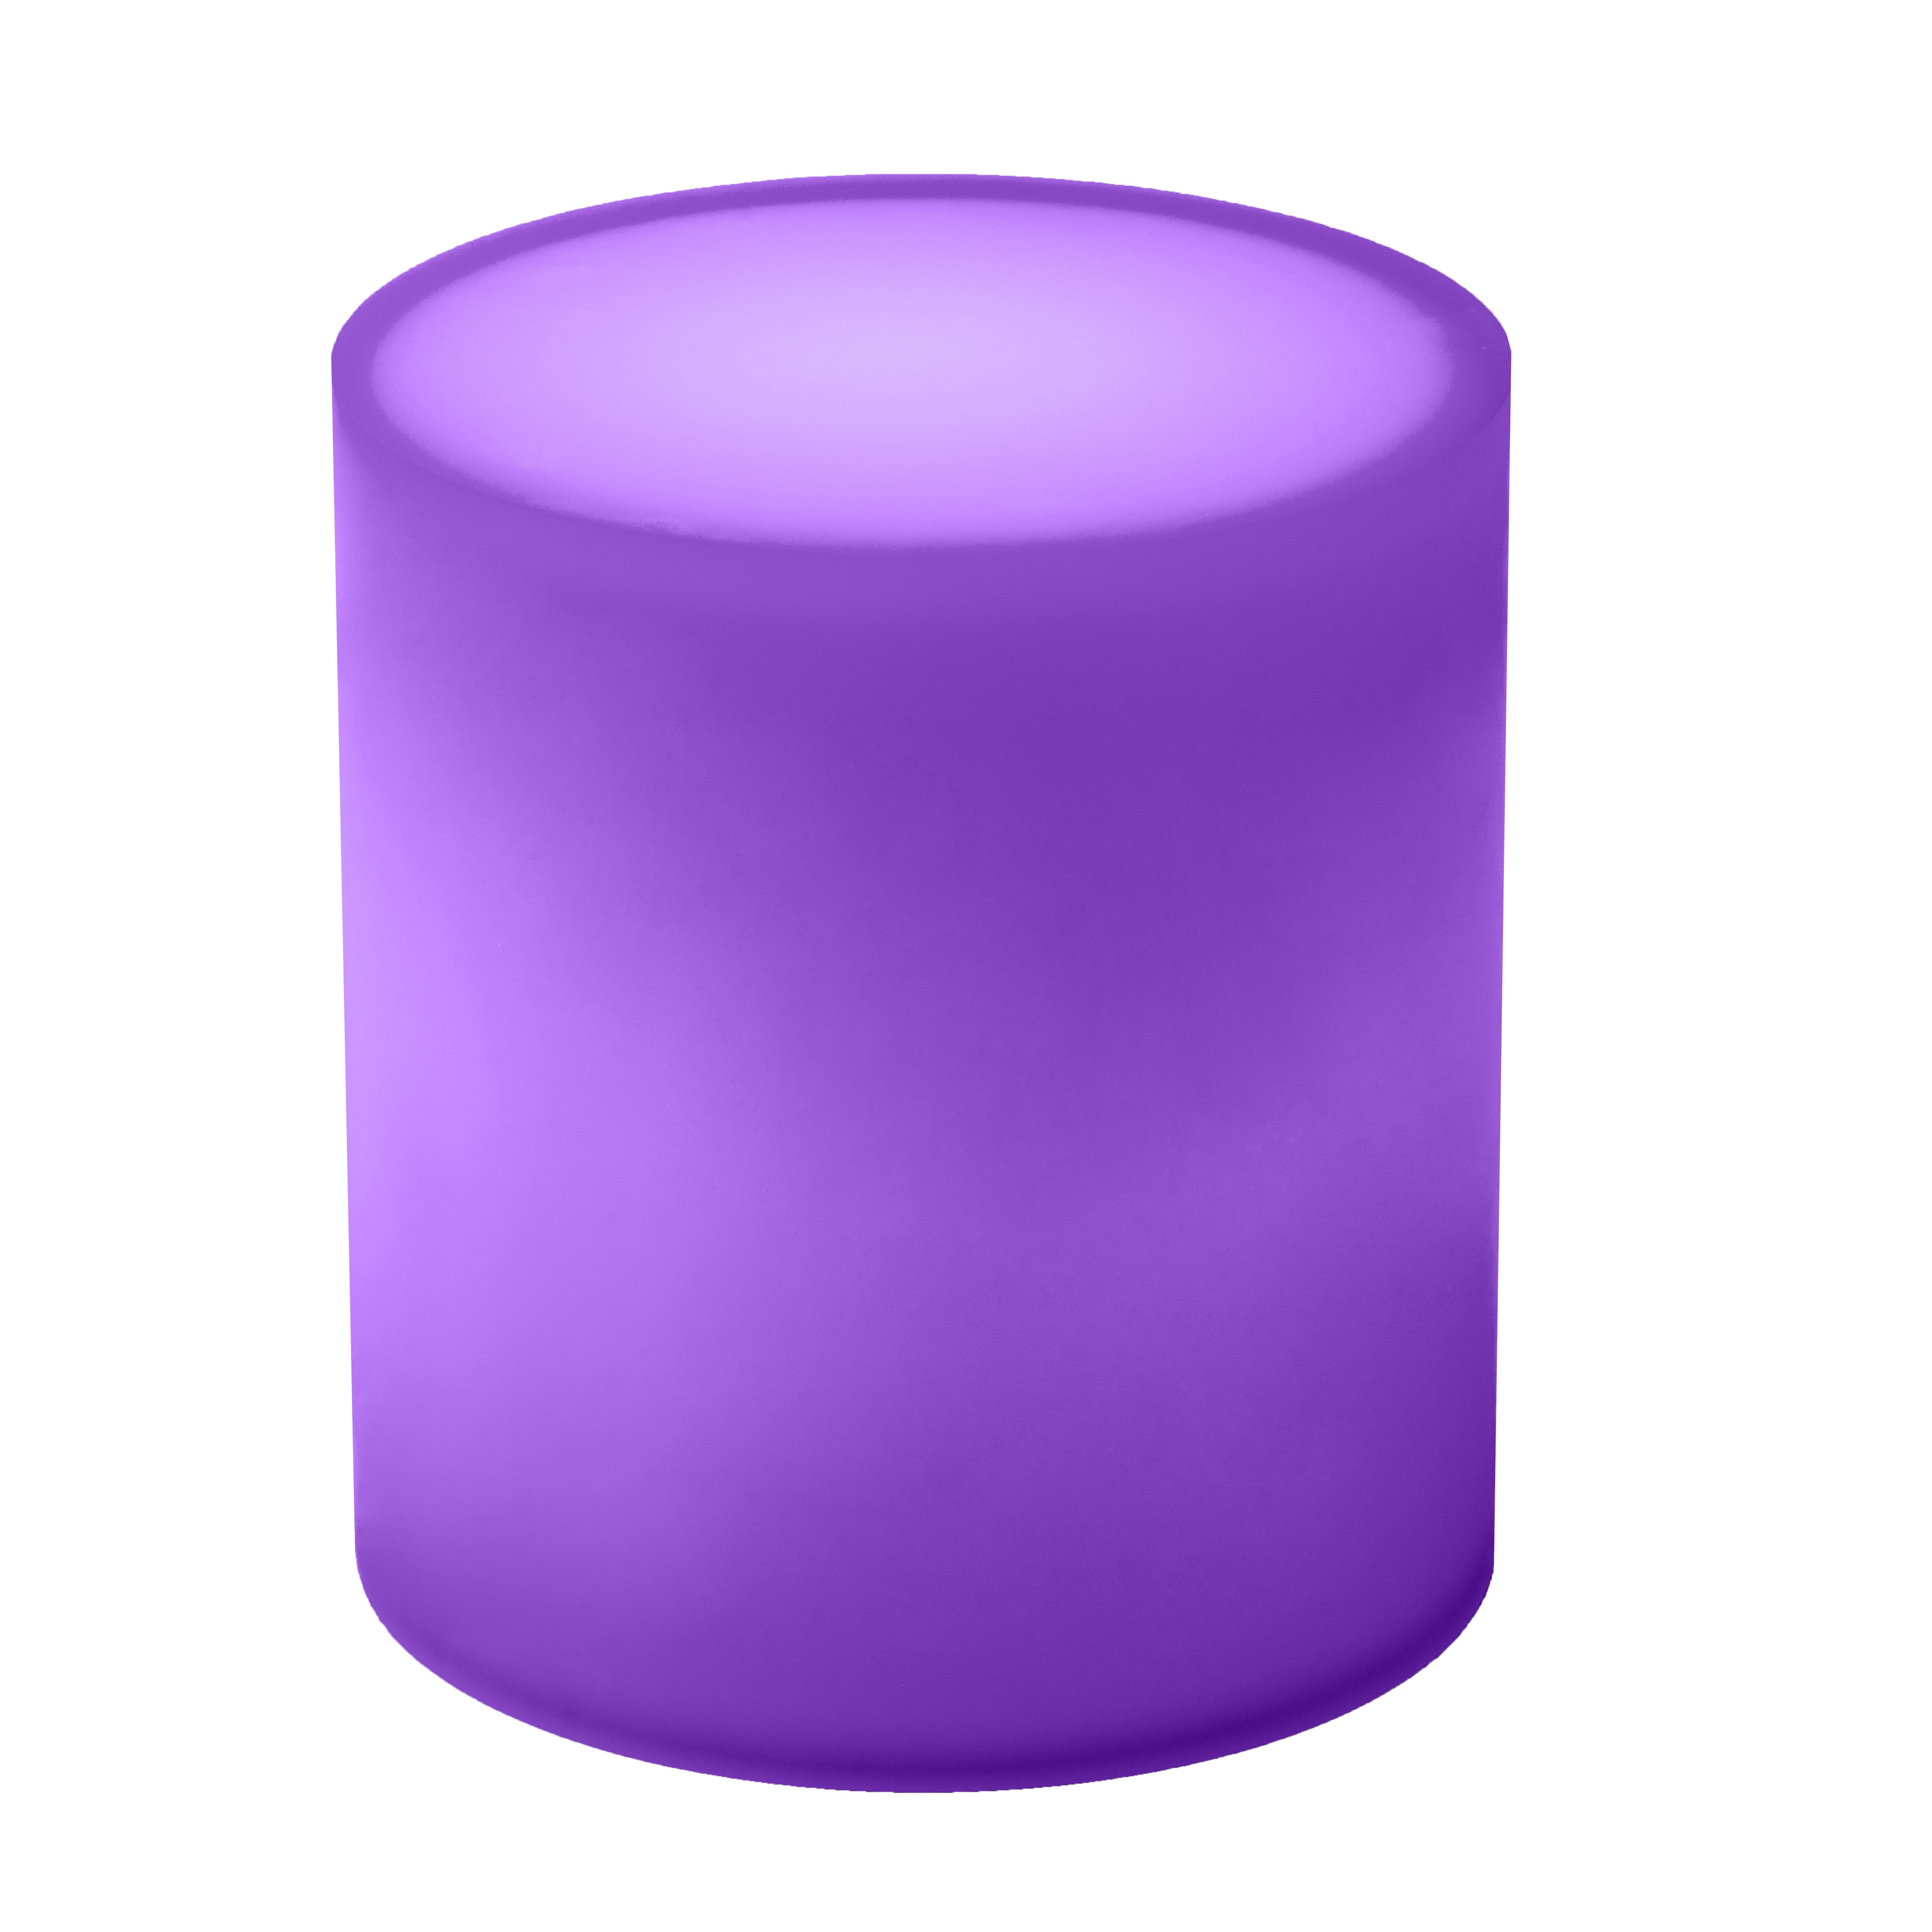 Drum Side Table In Purple